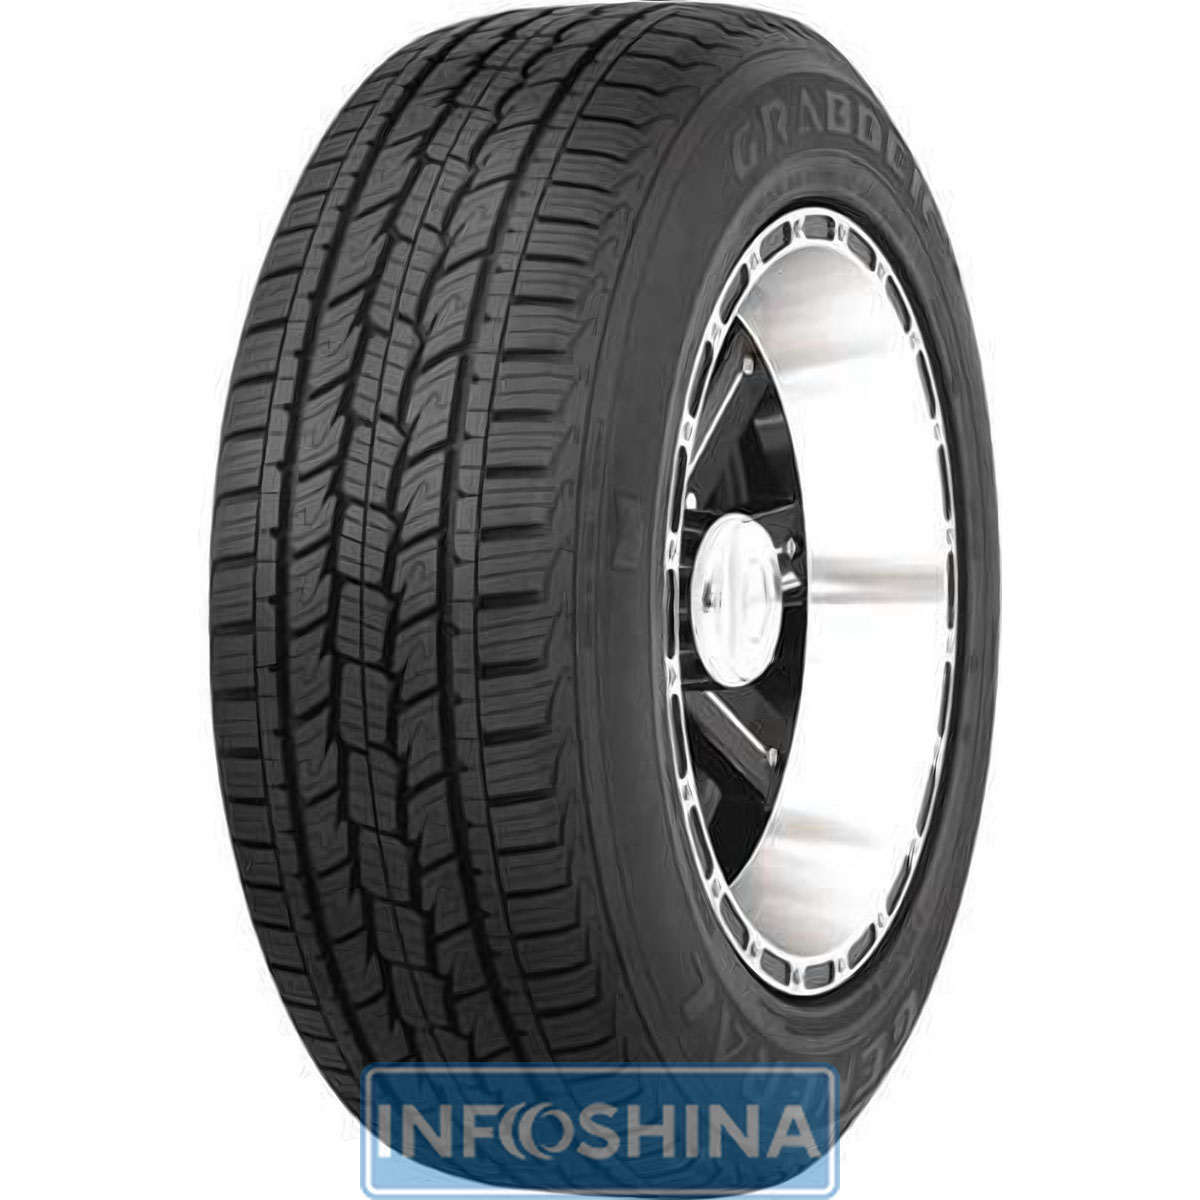 Купить шины General Tire Grabber HTS 265/60 R18 110T